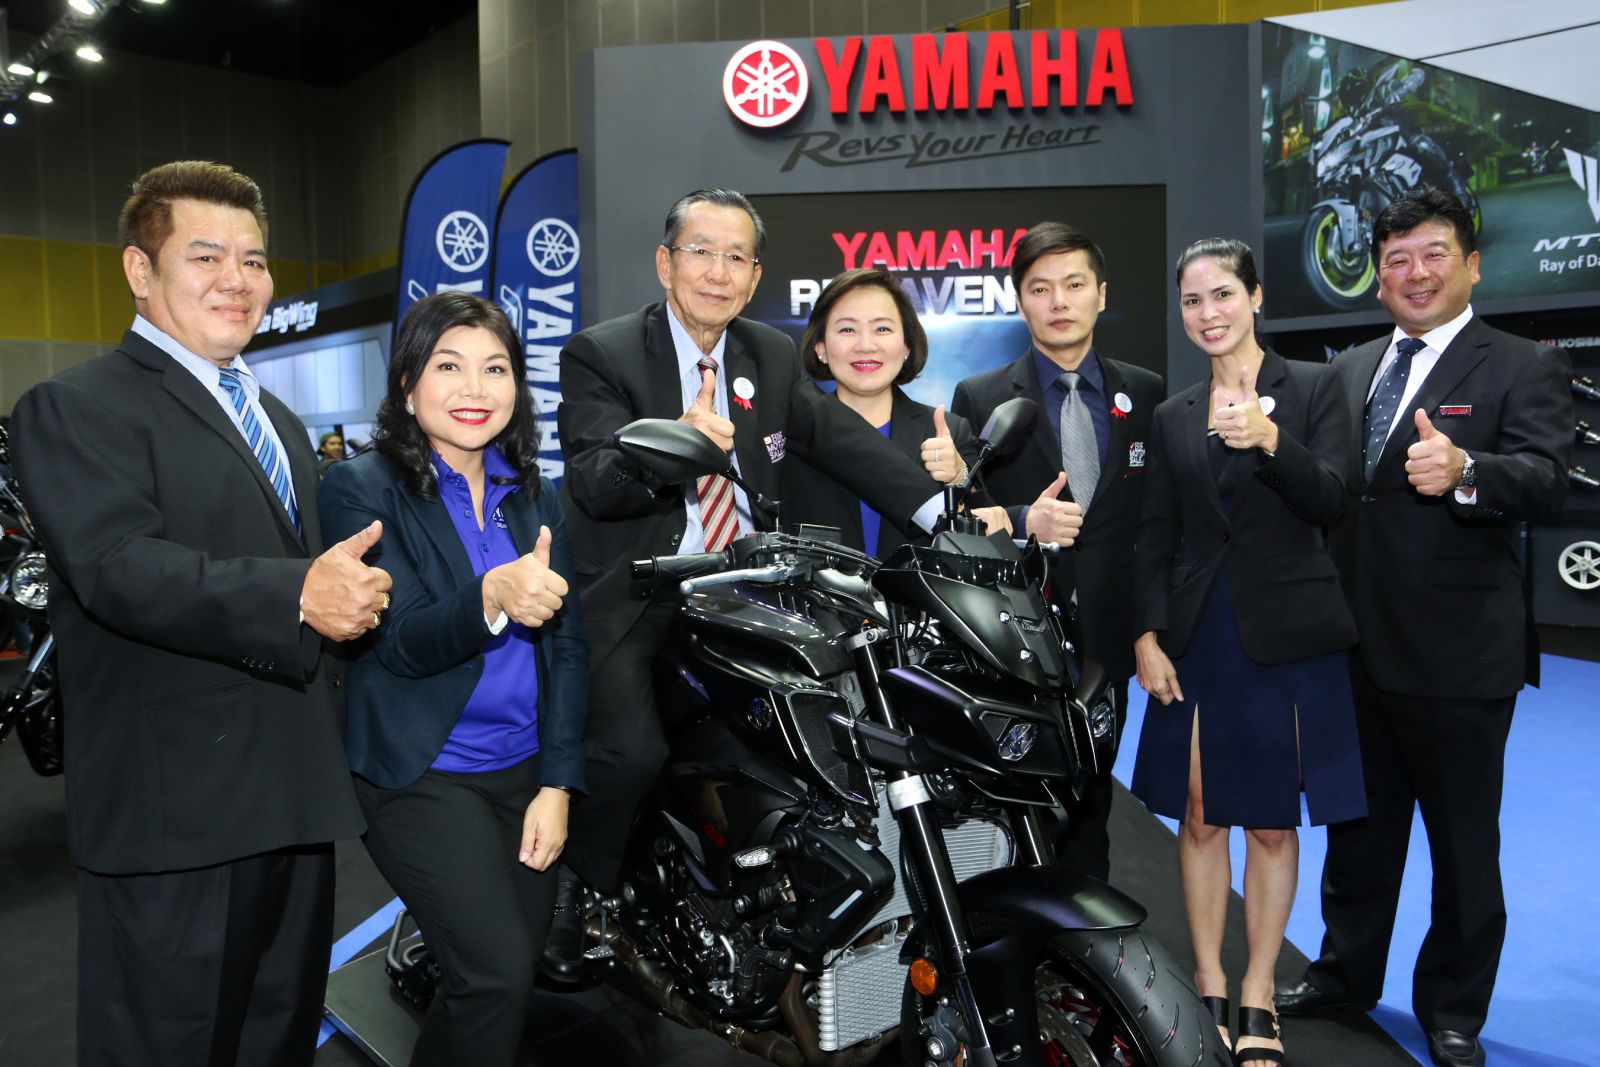 Yamaha MT 10